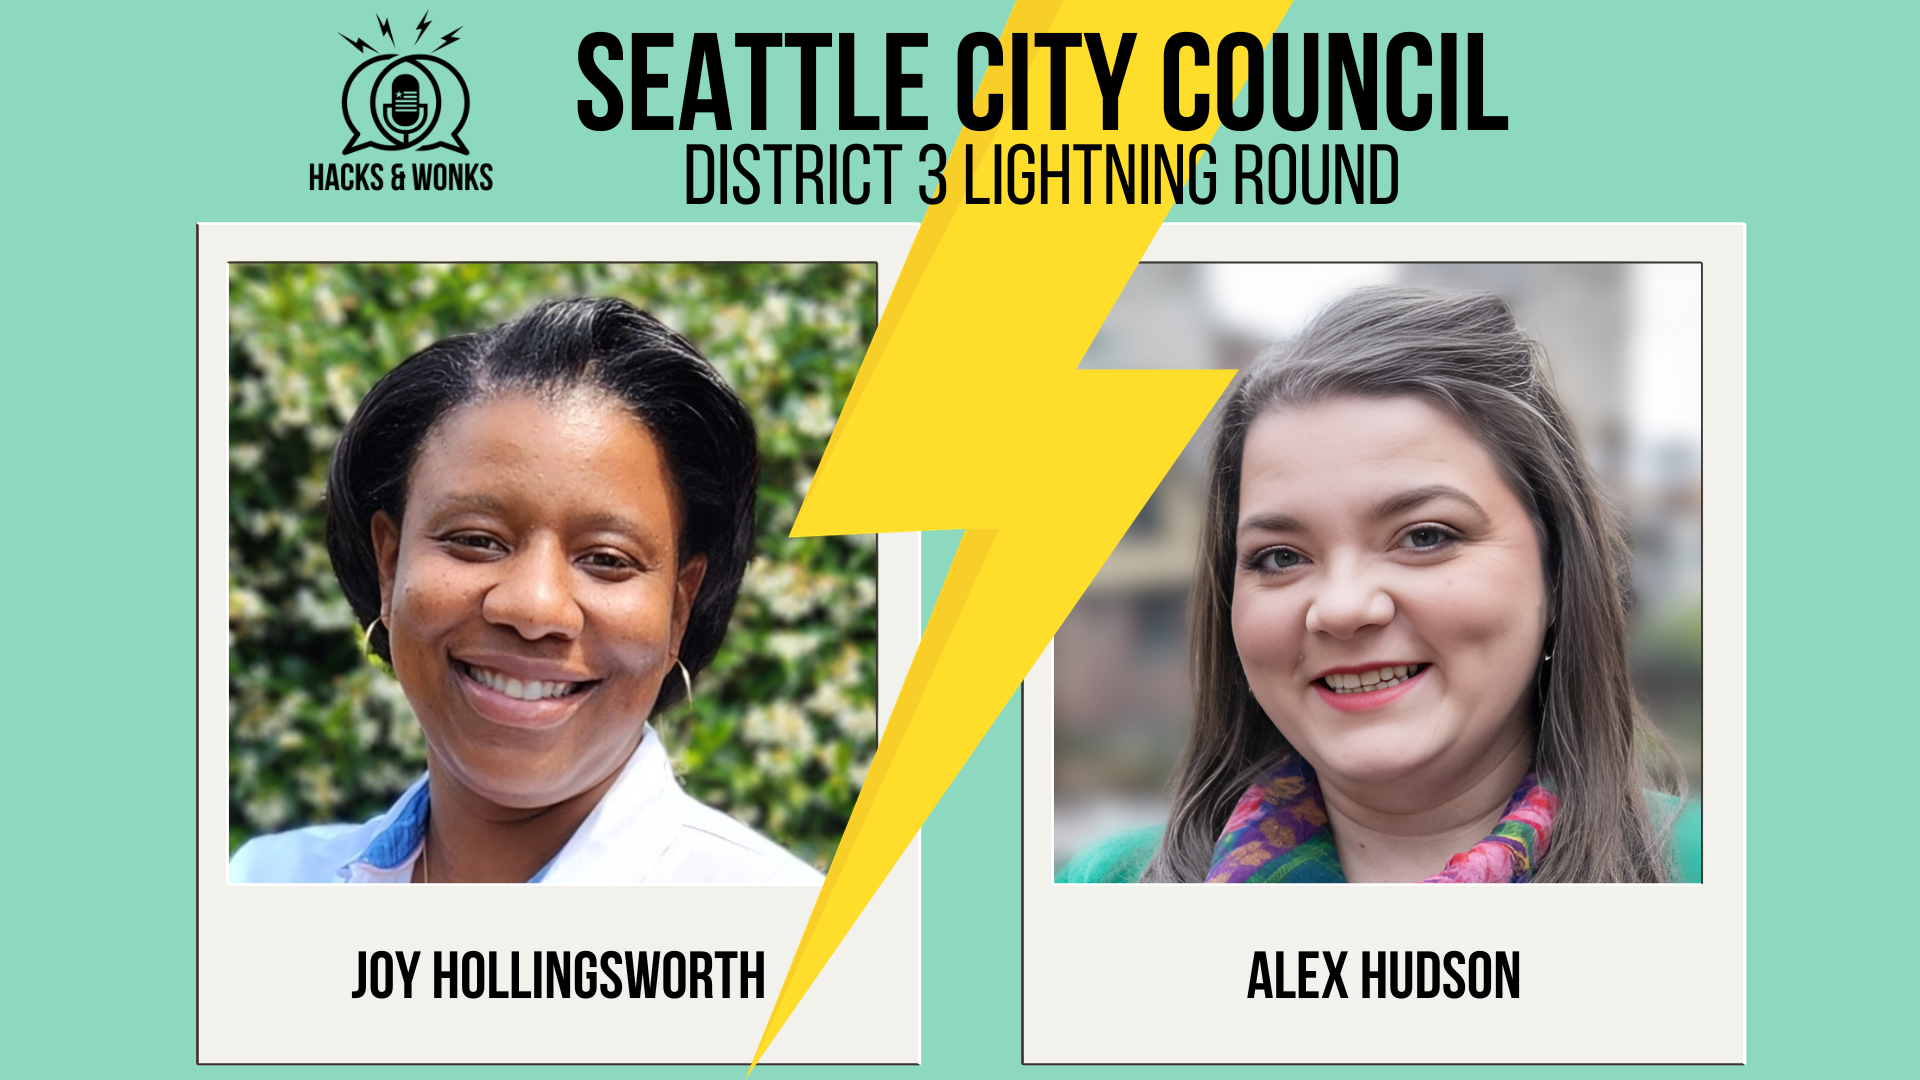 Lightning bolt divides photos of the District 3 candidates: Joy Hollingsworth and Alex Hudson